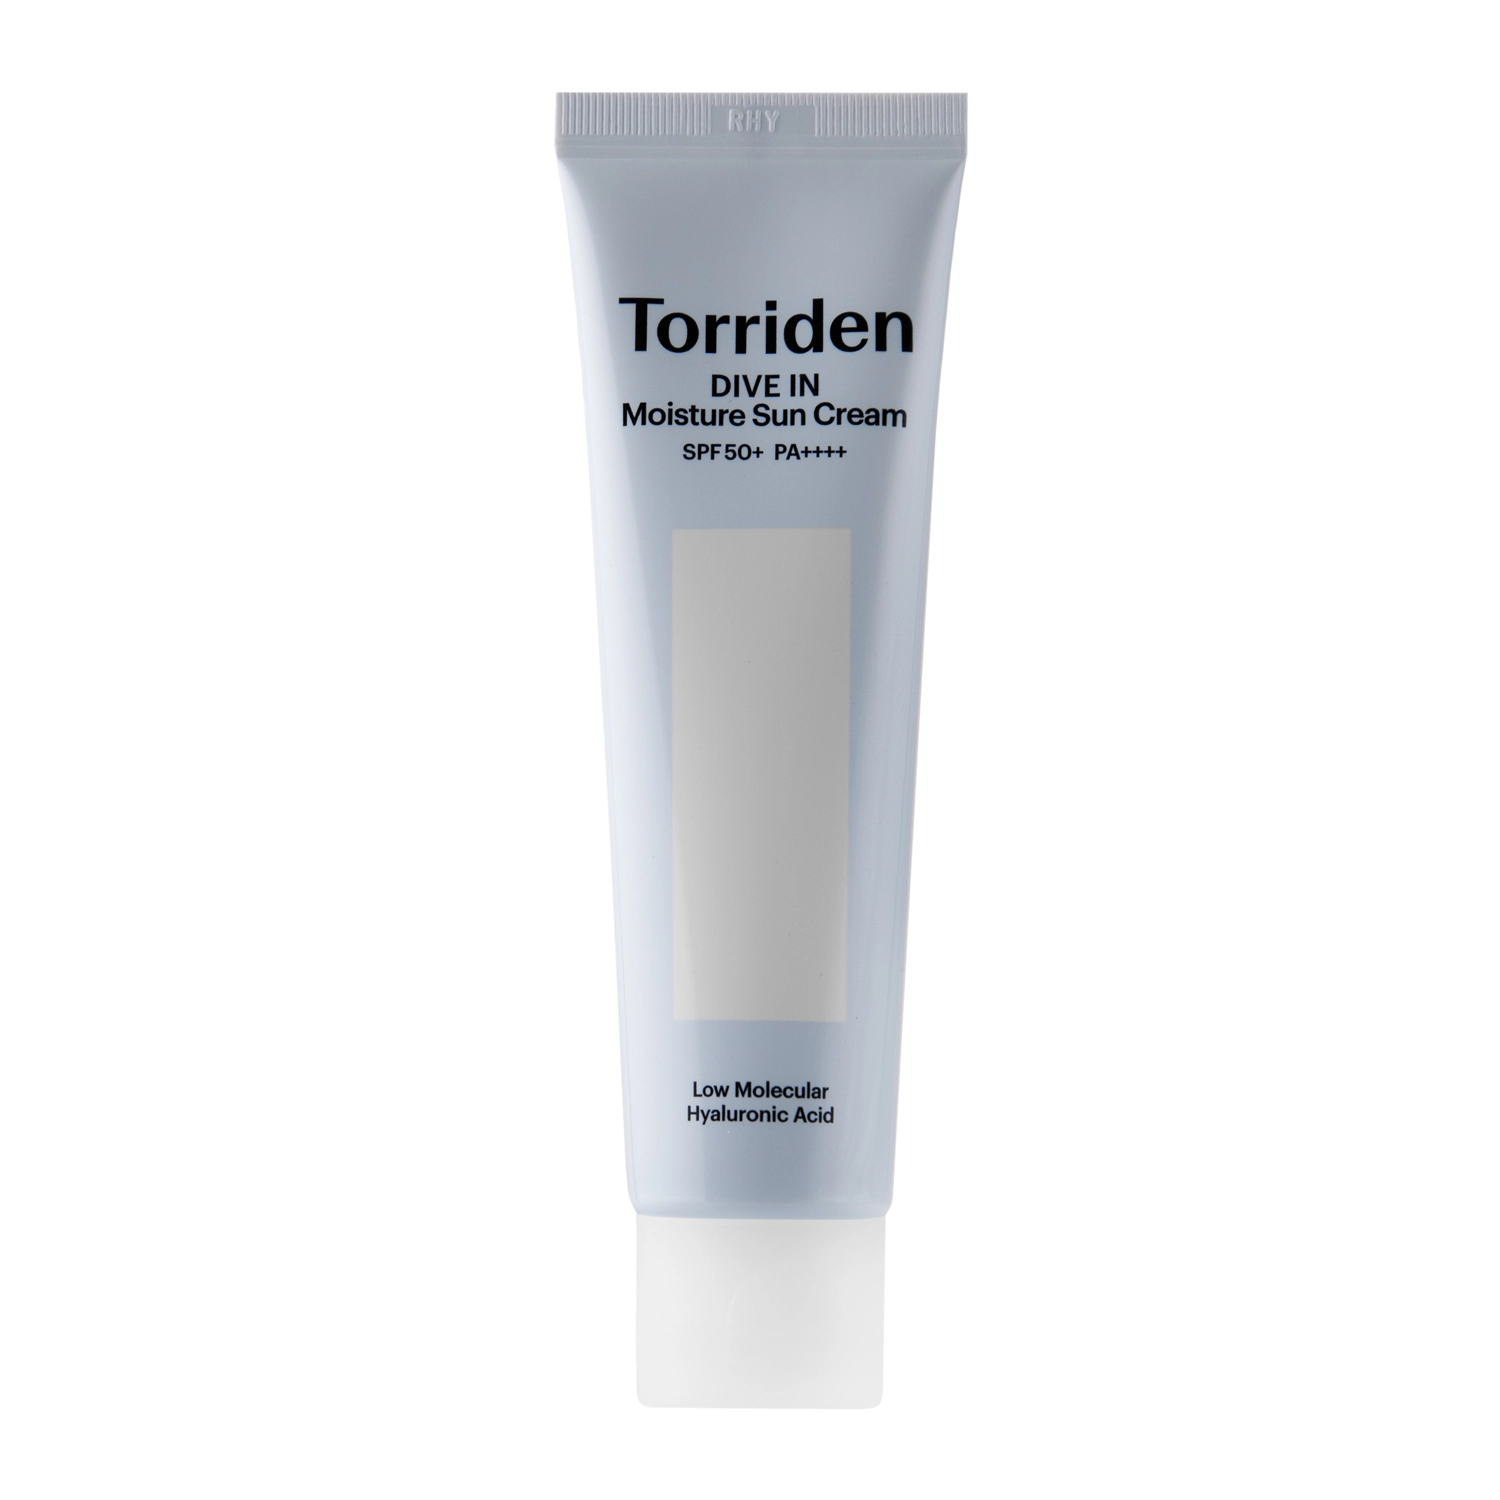 Torriden - Dive-In Watery Moisture Sun Cream SPF50+ PA++++ - Увлажняющий солнцезащитный крем - 60ml